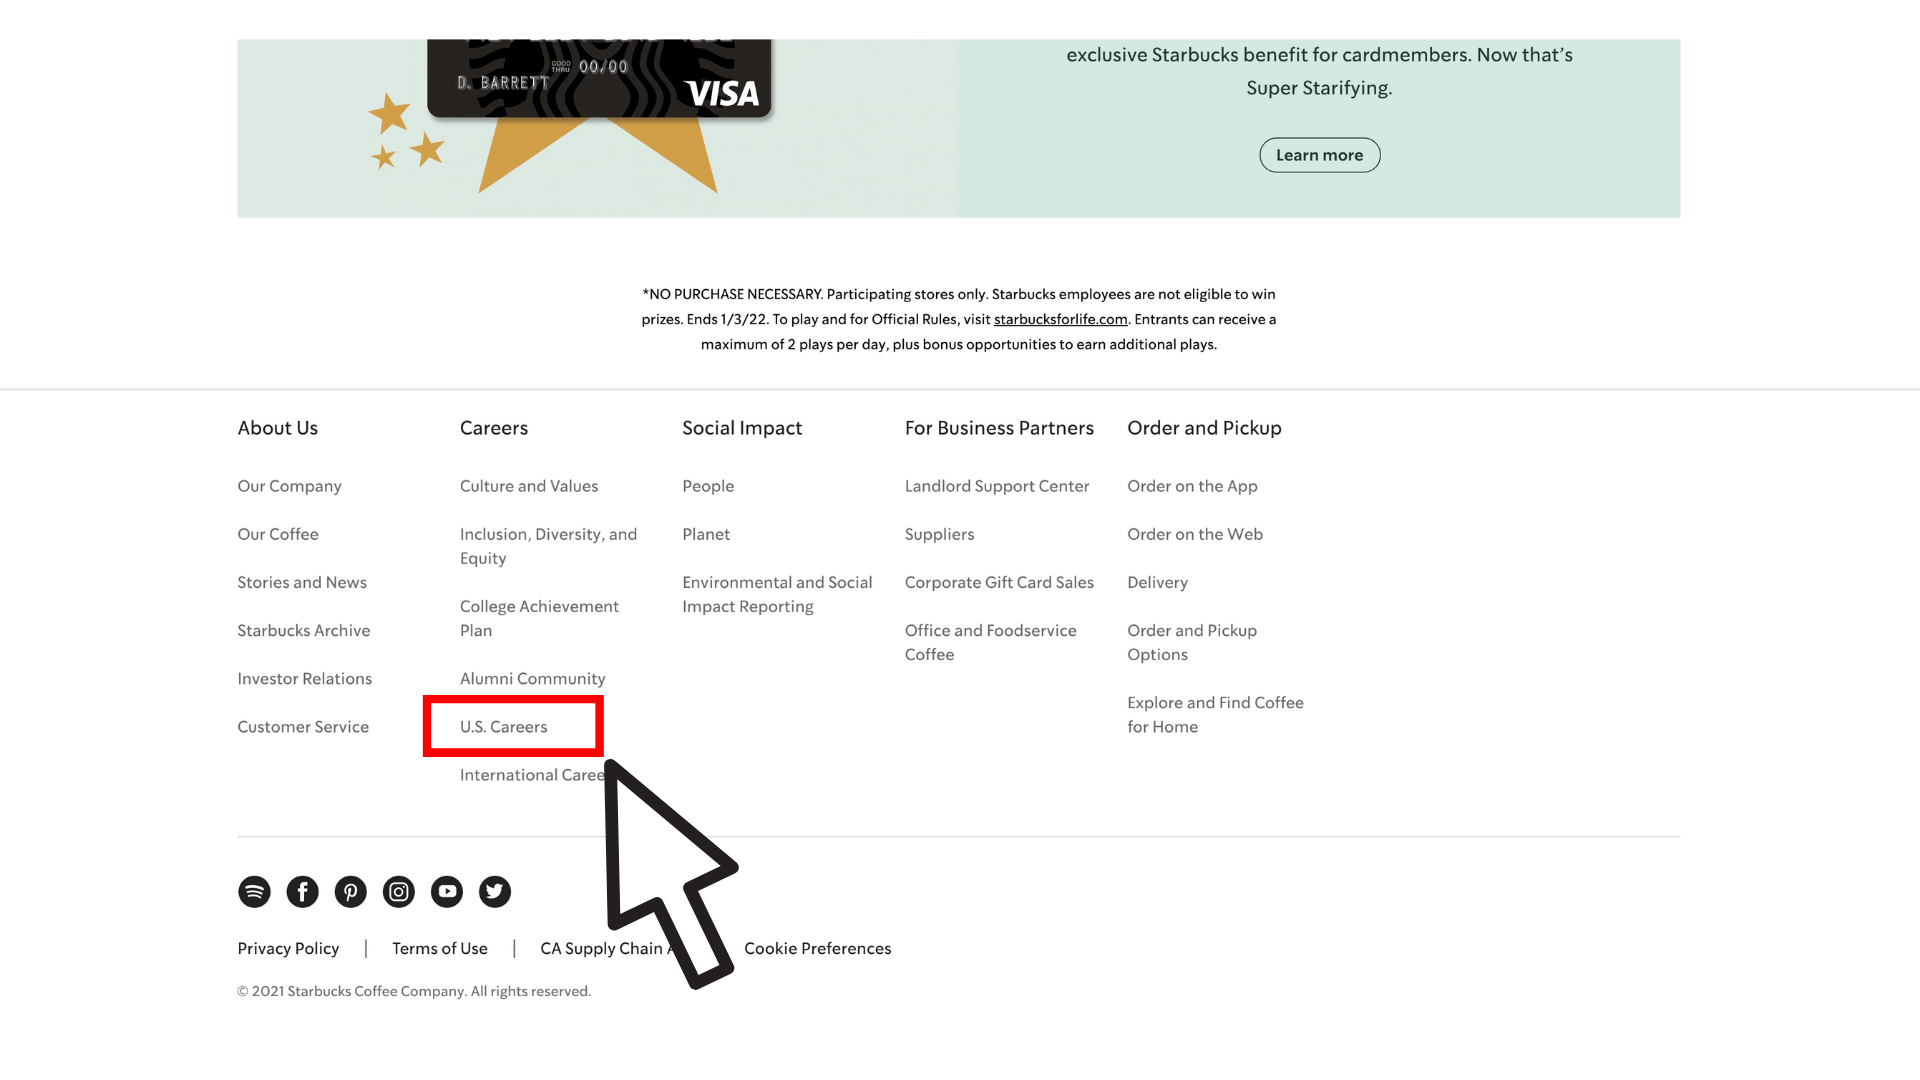 Starbucks website screenshot with employment opportunities